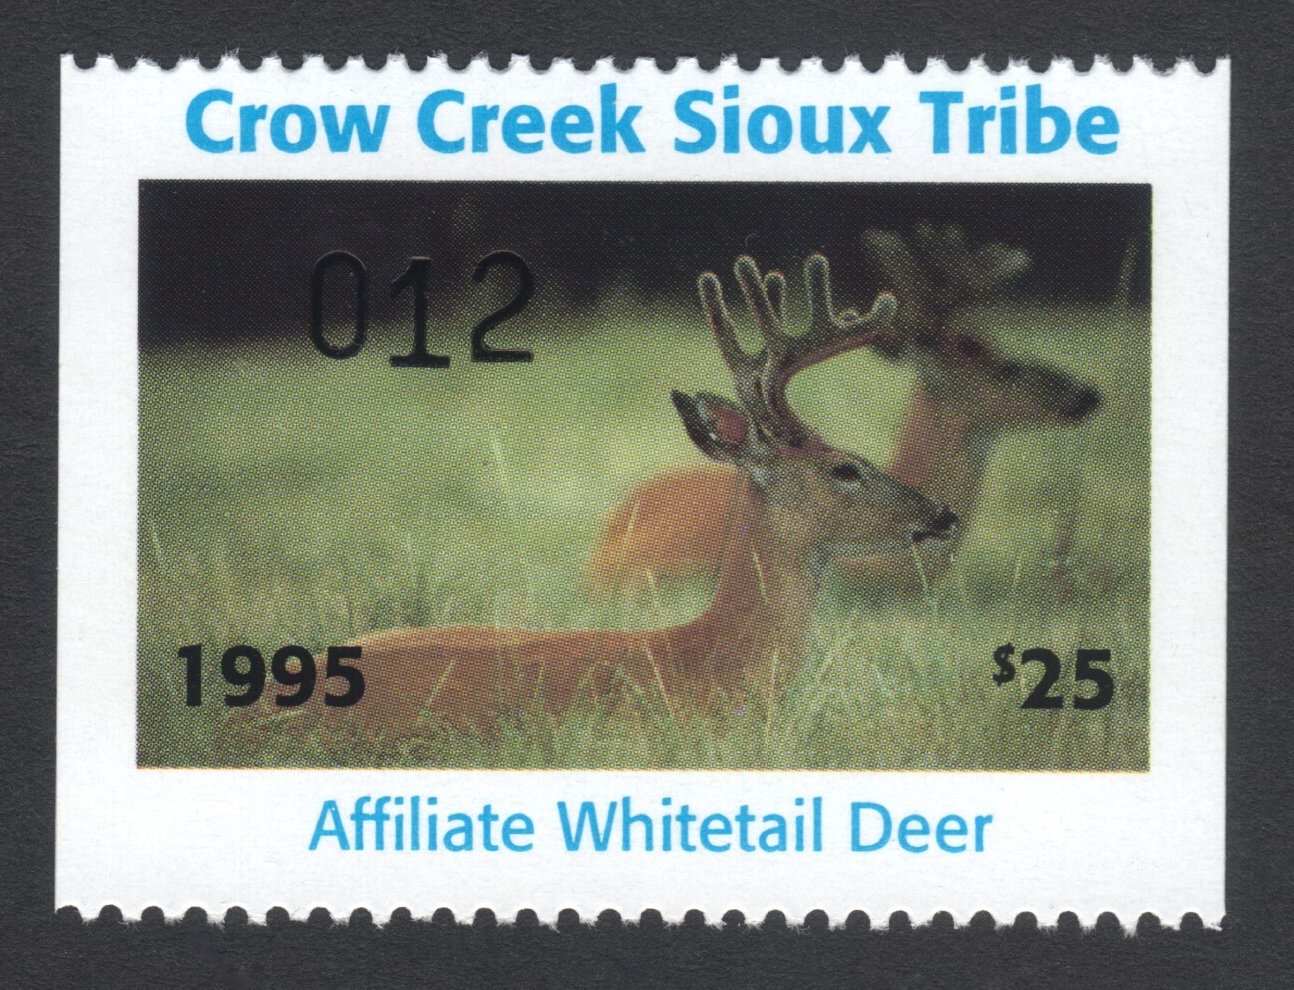 1995 Crow Creek Affiliate Whitetail Deer